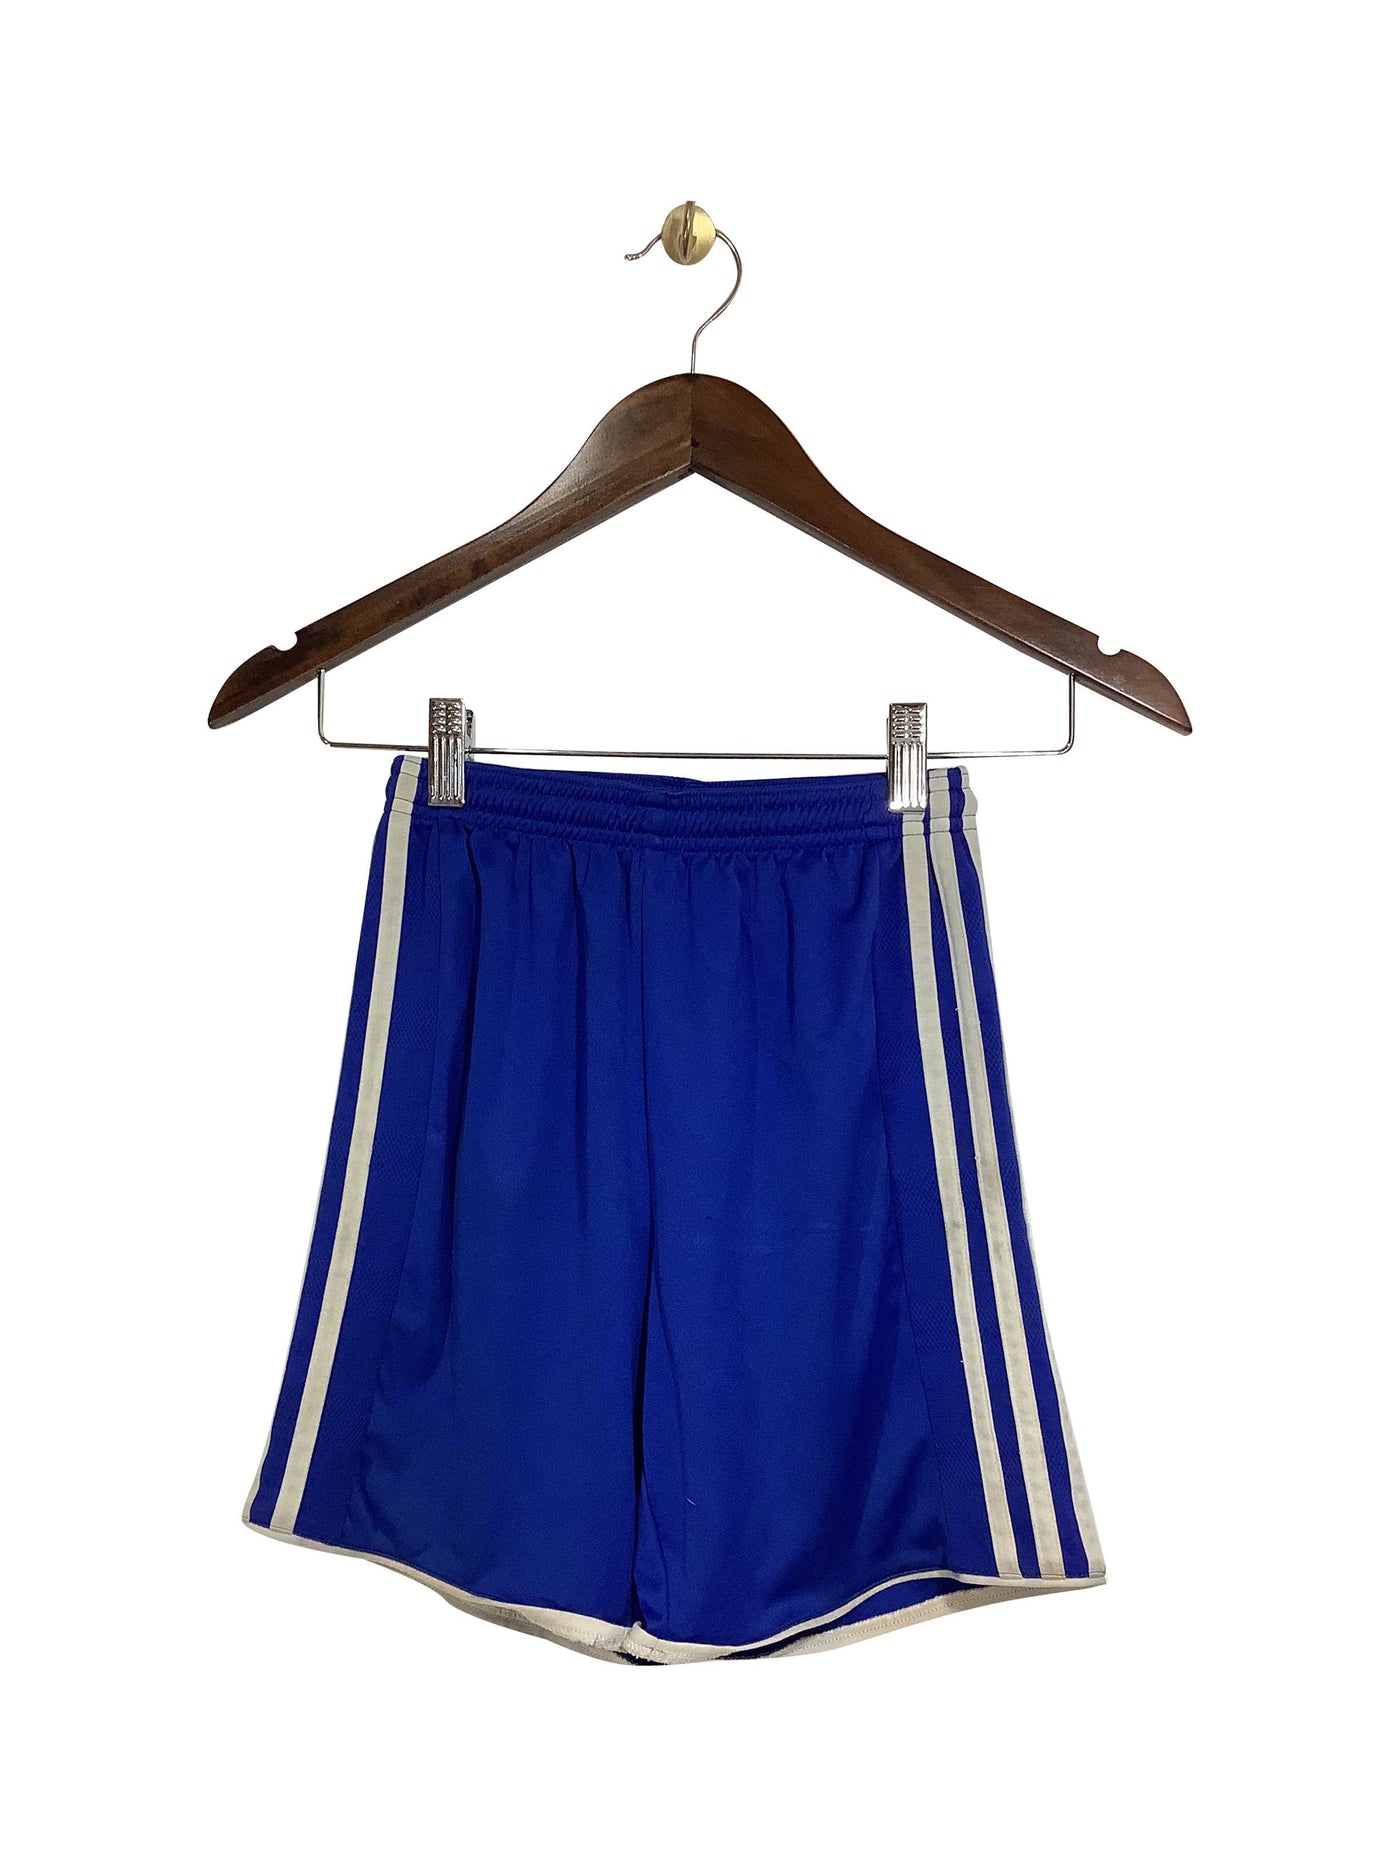 ADIDAS Regular fit Activewear Short in Blue - Size M | 15.99 $ KOOP